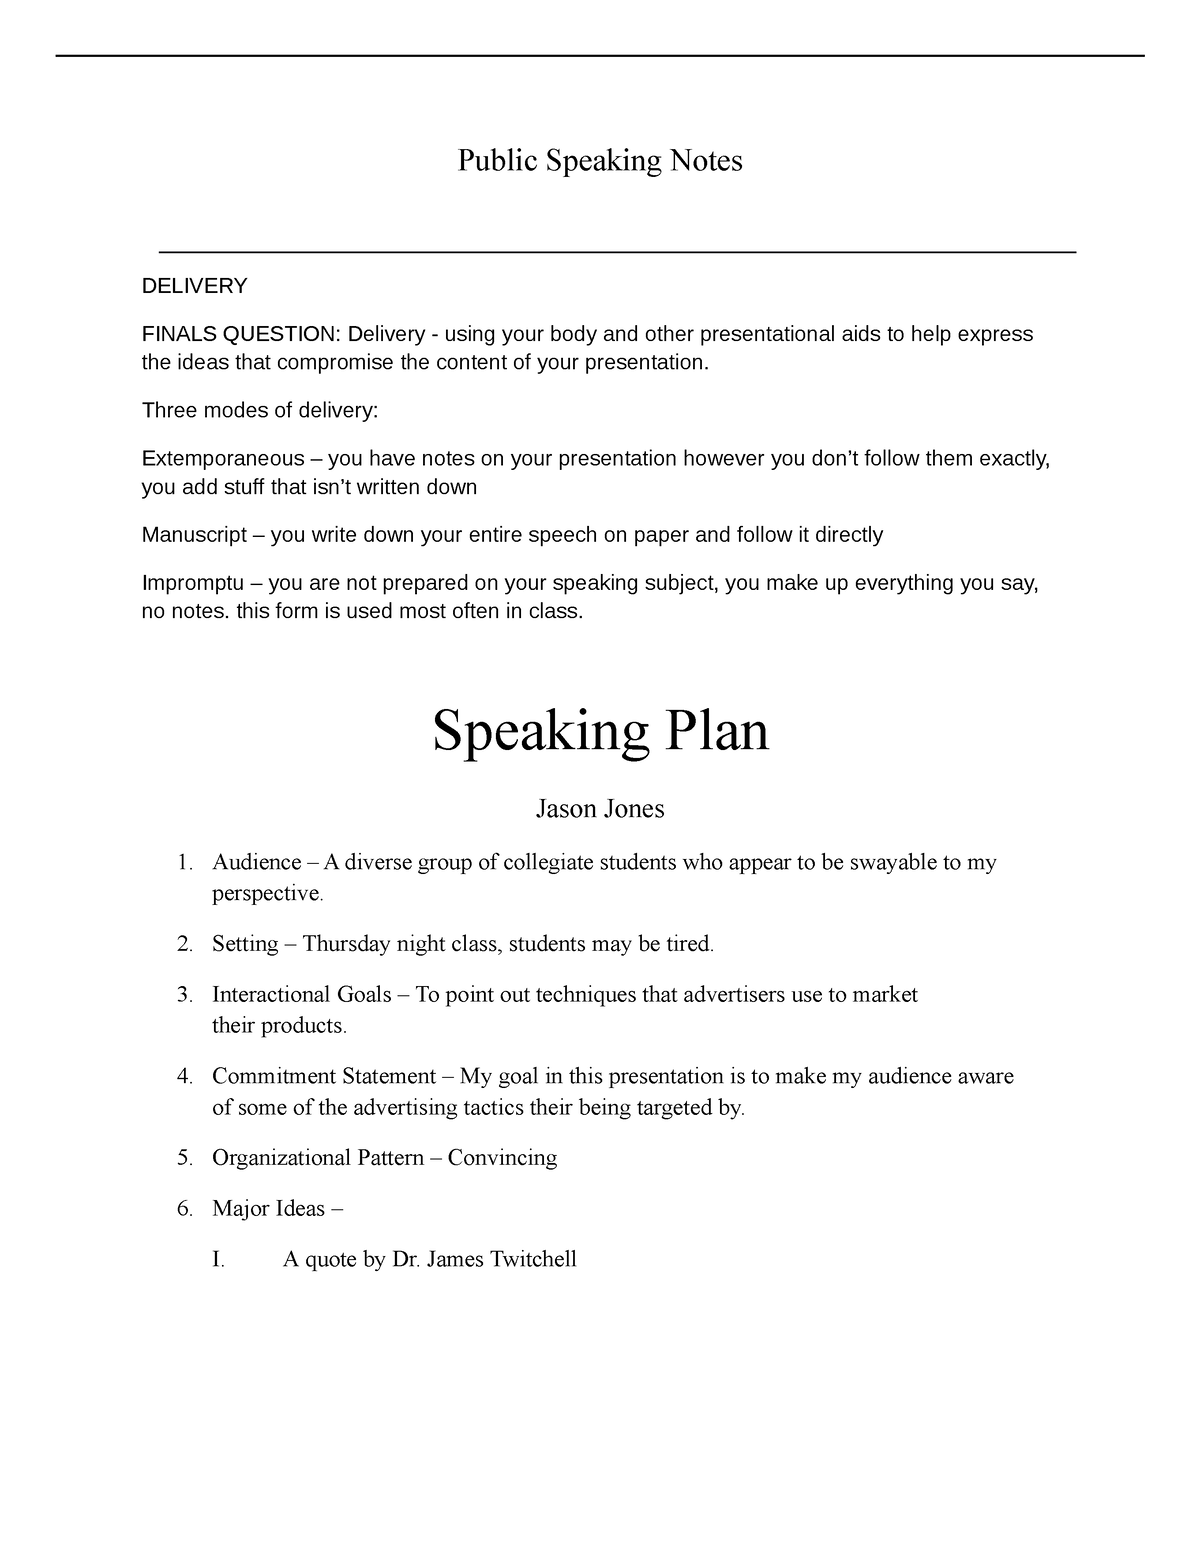 Speaking Plan in Public Speaking study guide - Public Speaking Notes ...